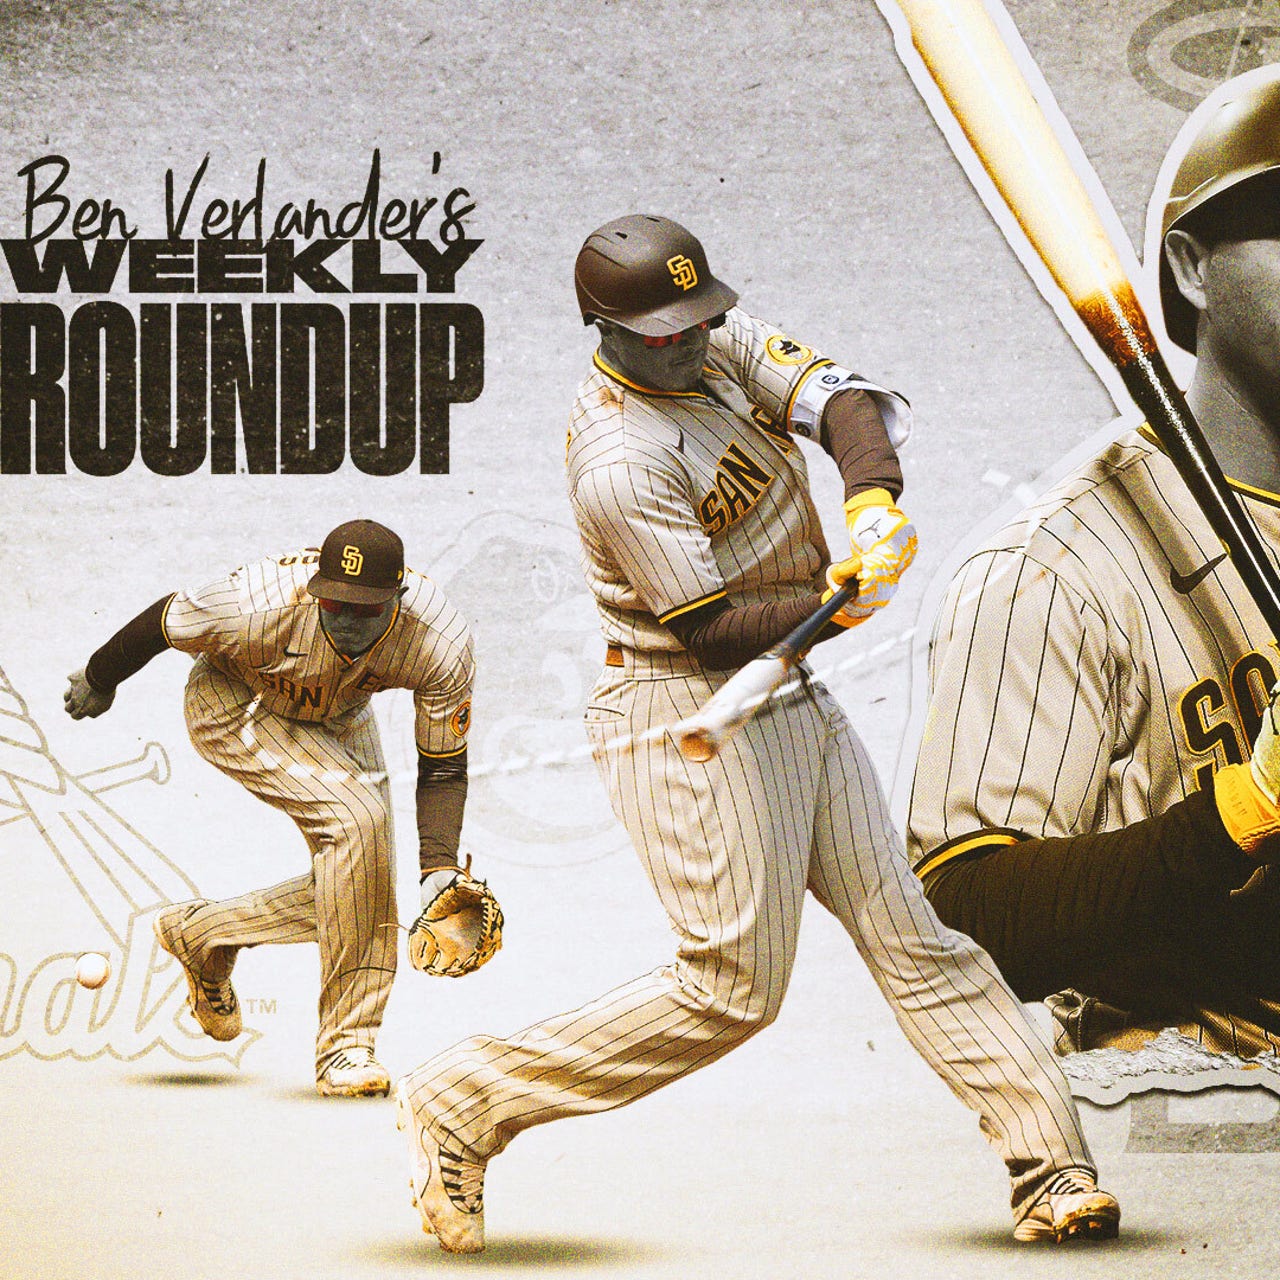  New York Mets MLB Poster Set of Six Vintage Baseball